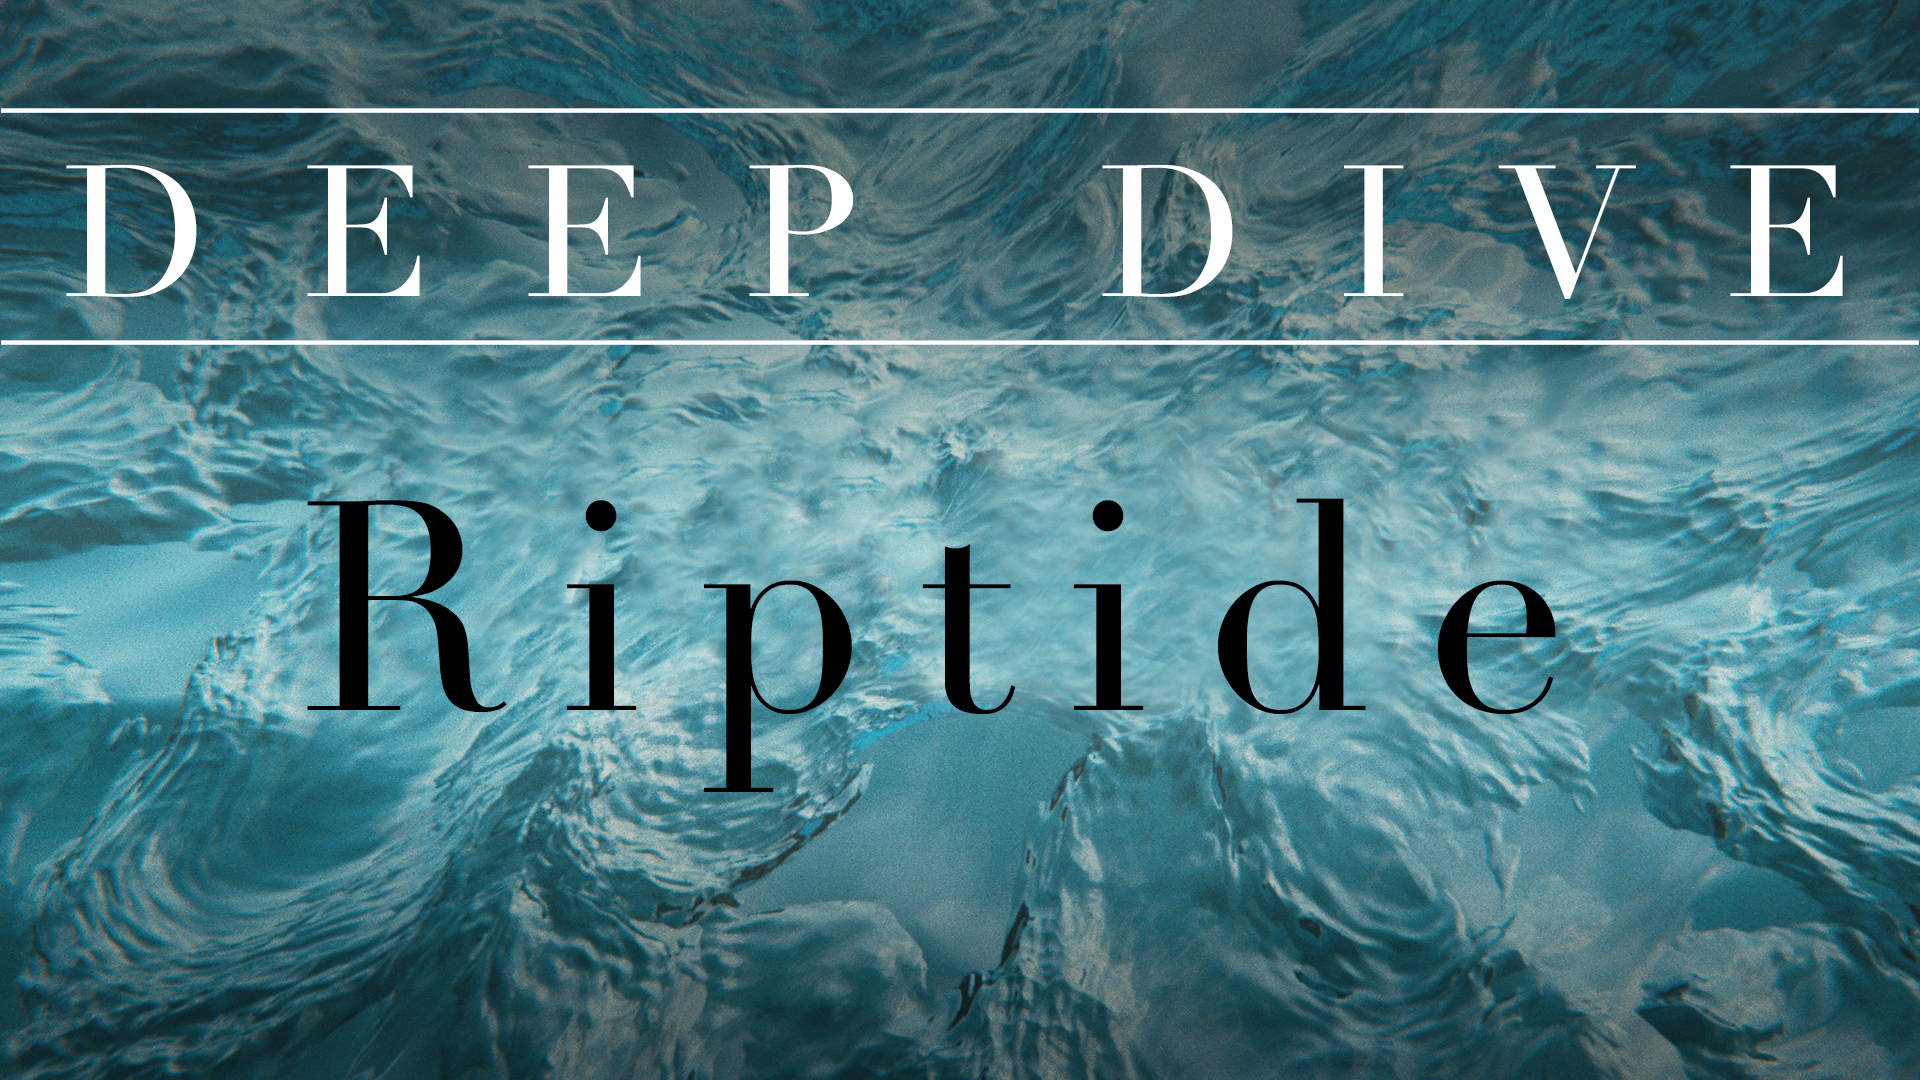 Deep Dive Part 2 "Riptide" (Traditional)